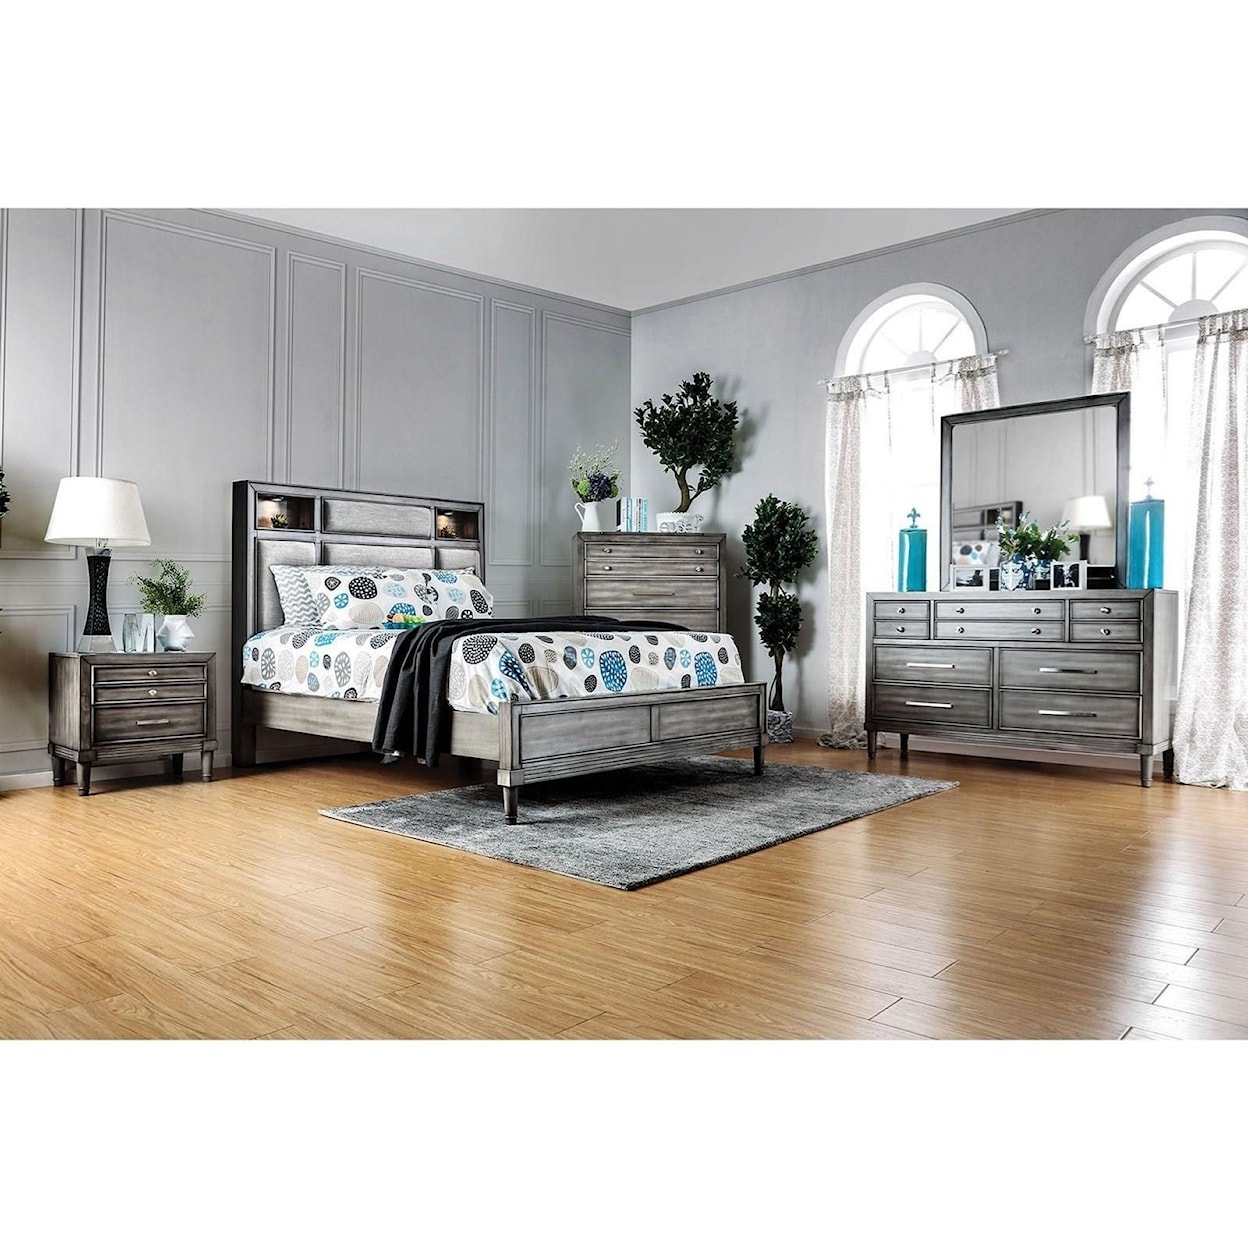 Furniture of America Daphne California King Bed